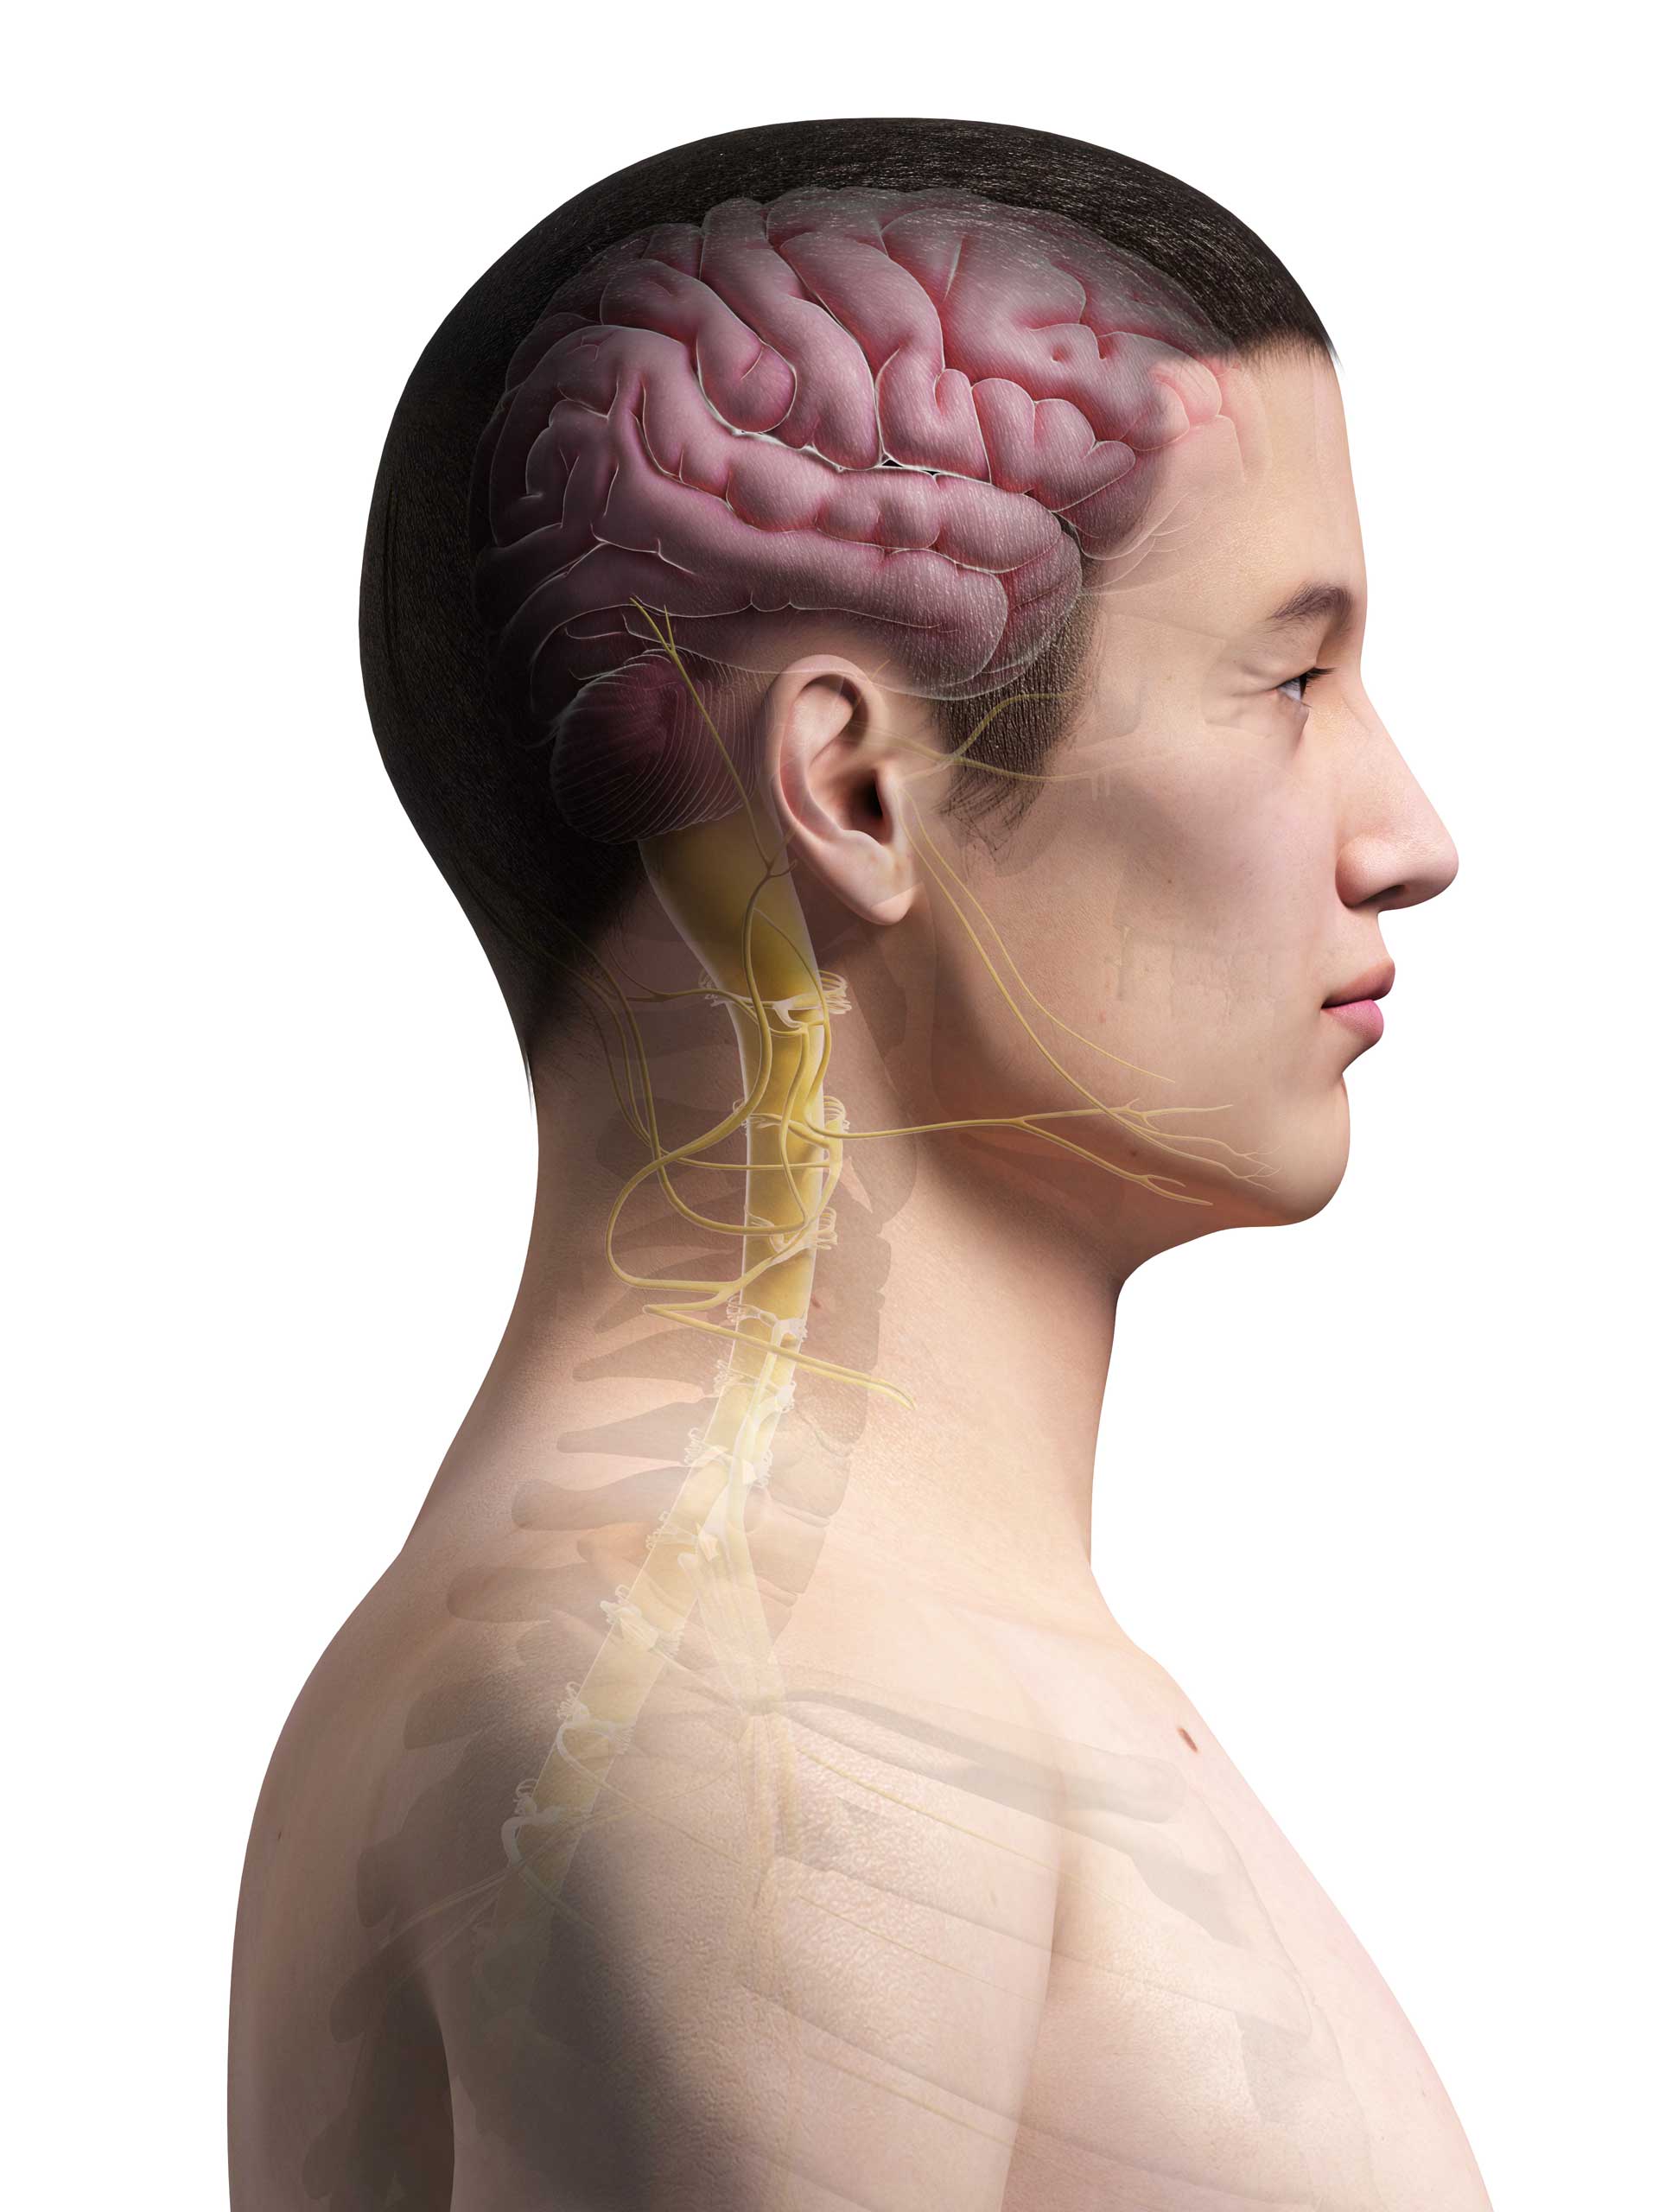 Invasive and Non-invasive Vagus Nerve Stimulation Work in the Same Way